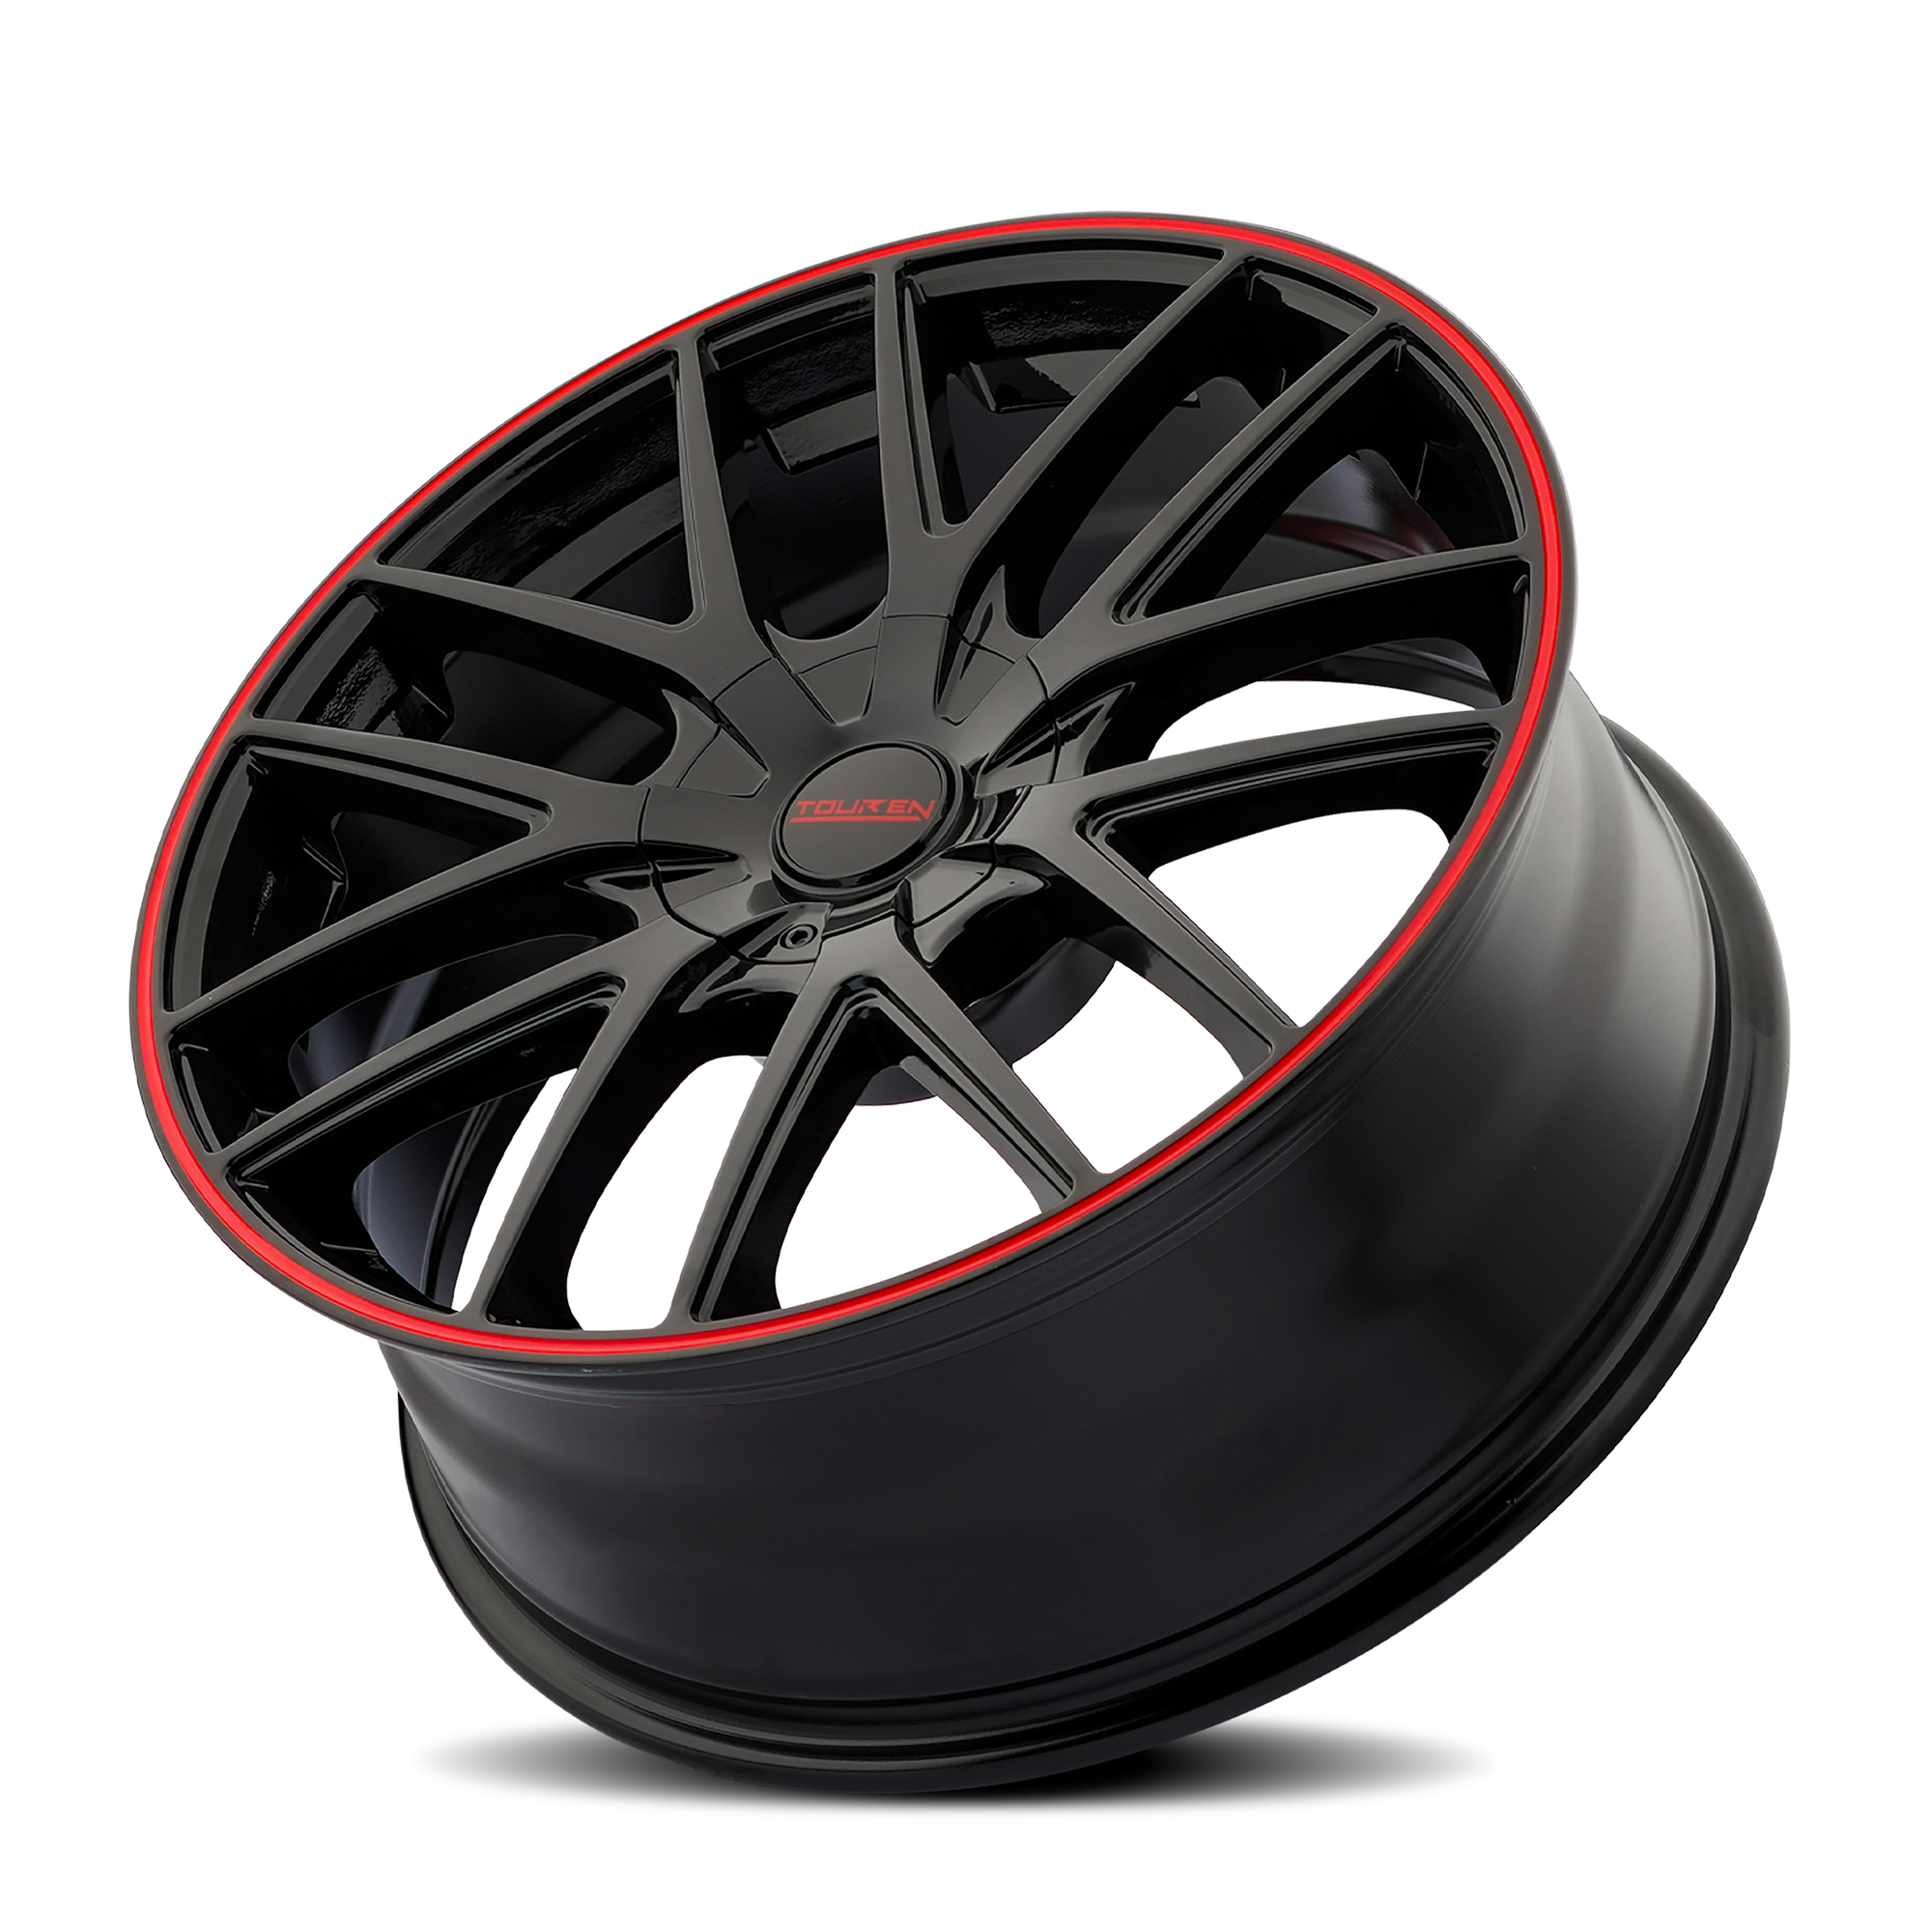 Touren TR60 Gloss black with red ring 18x8 +40 5x112|5x120mm 74.1mm - WheelWiz